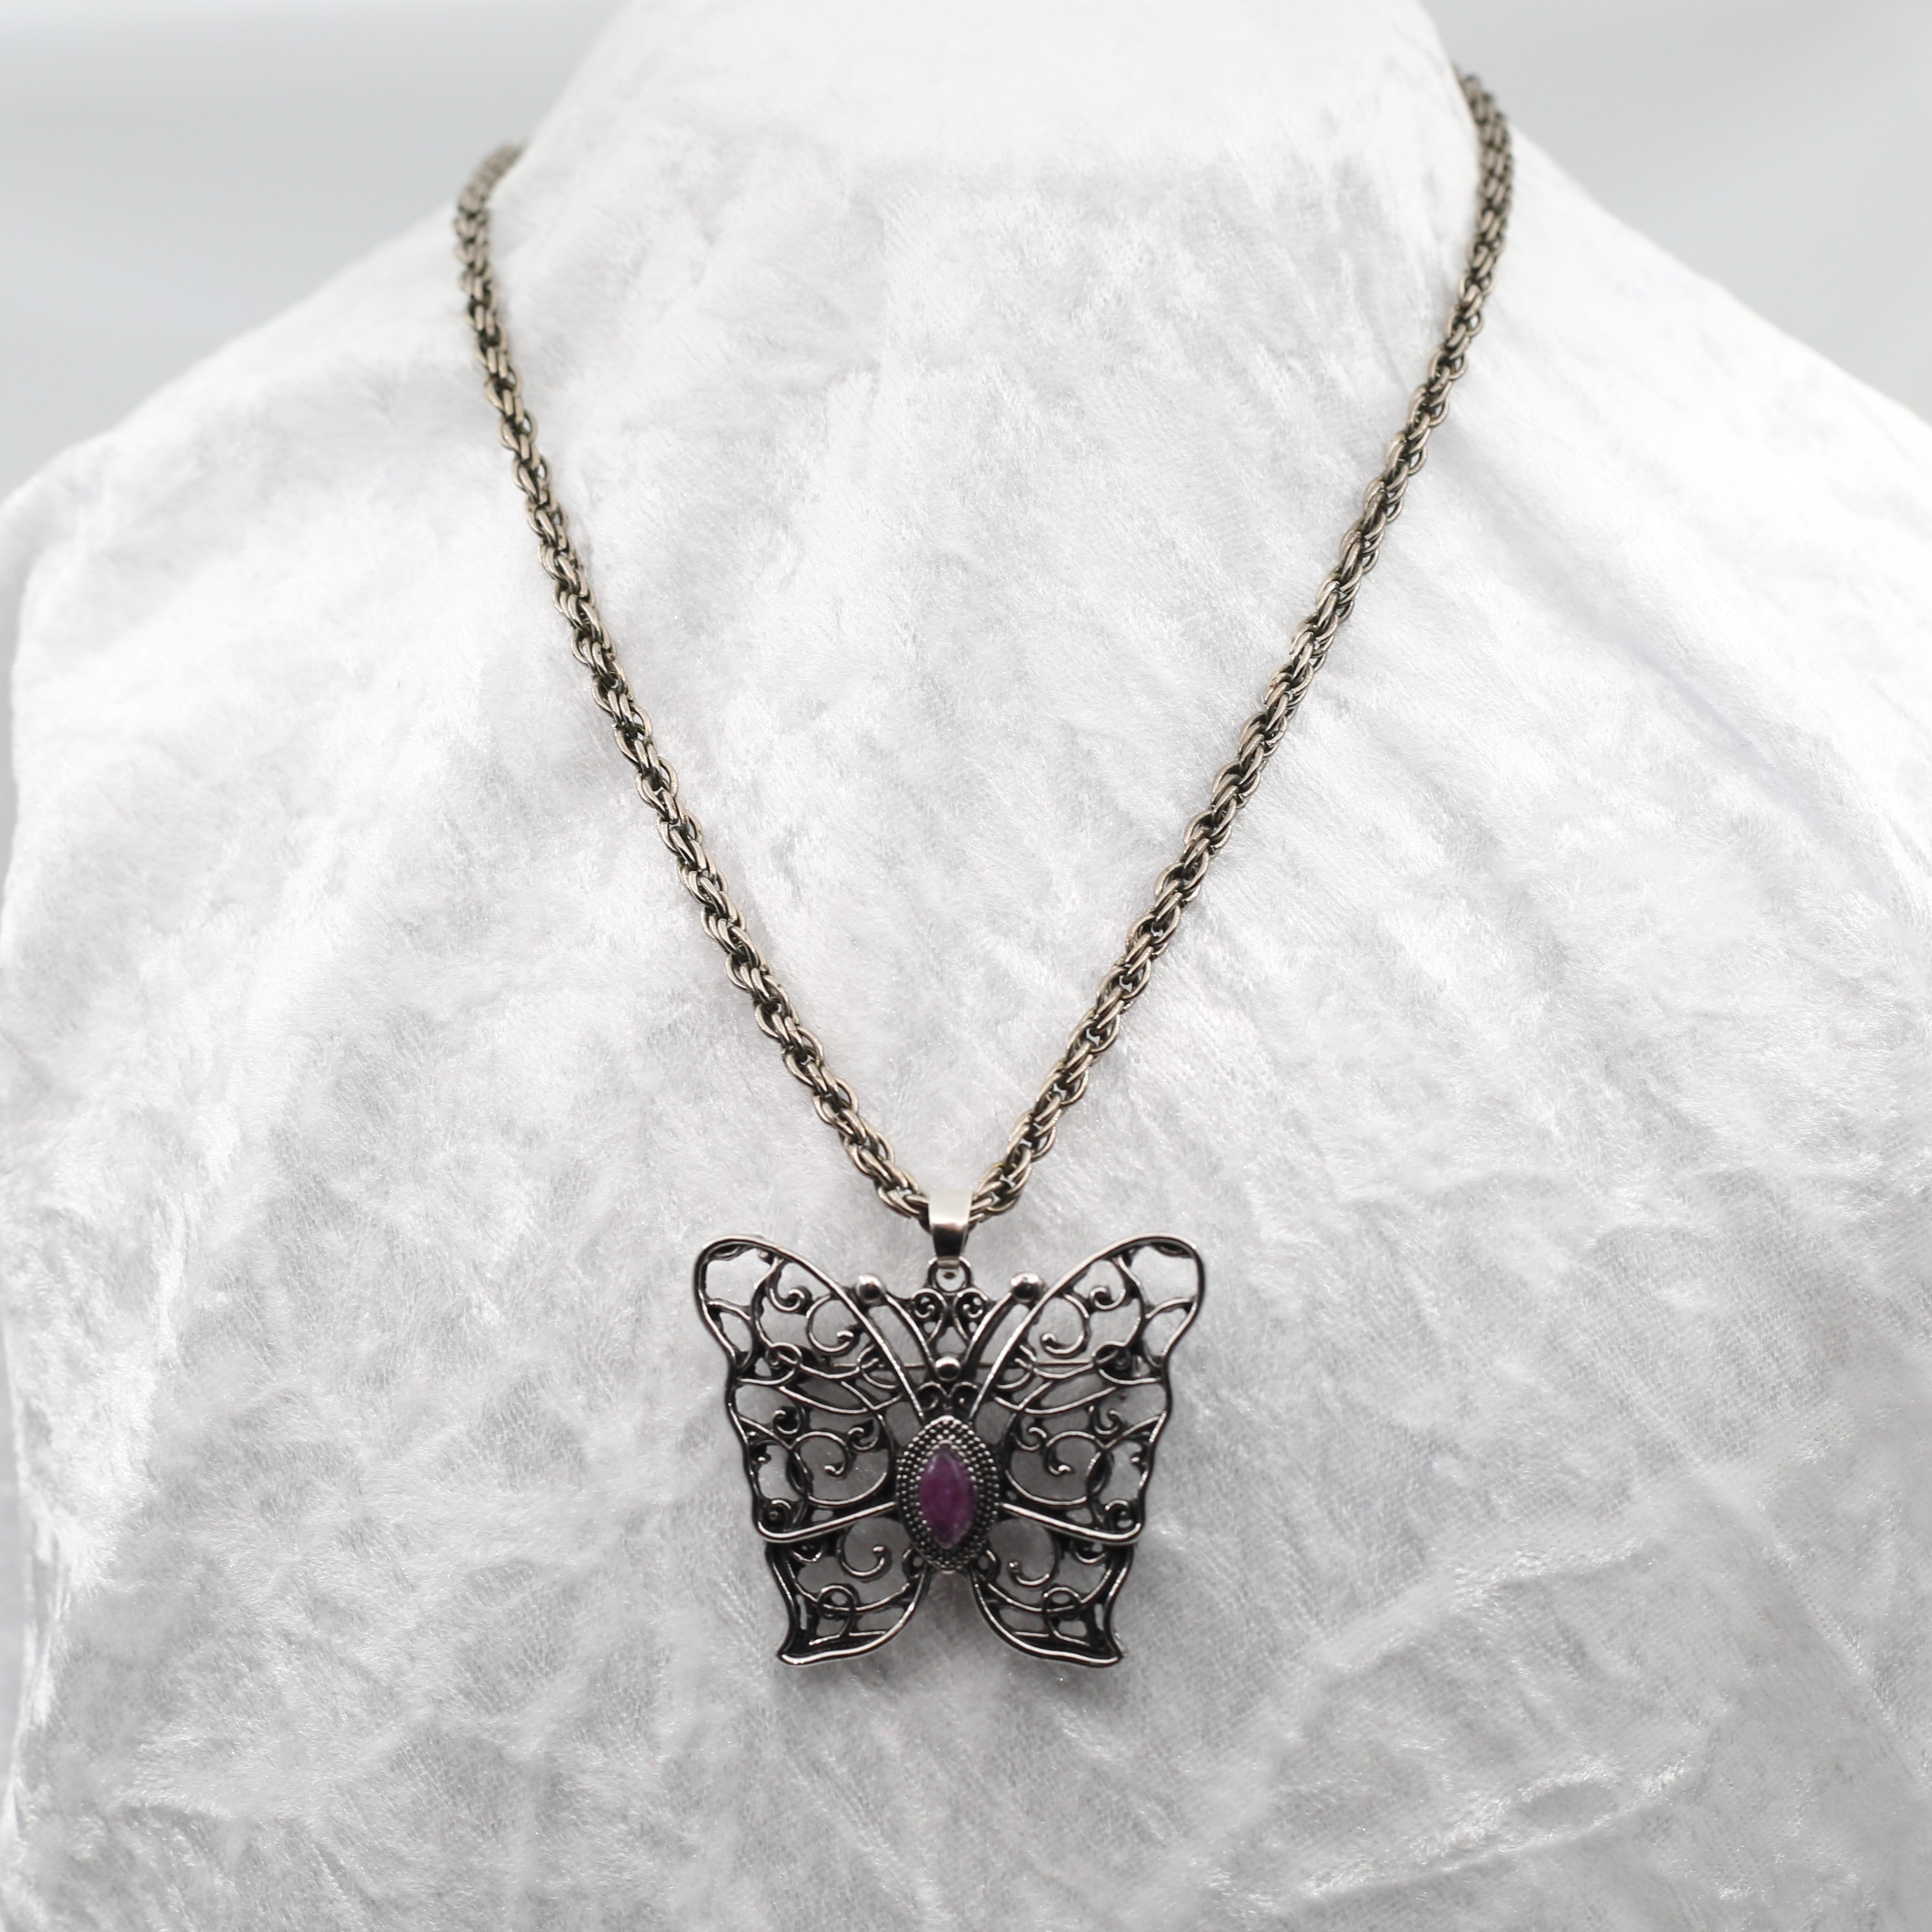 Vintage Butterfly Brooch Pendant Necklace